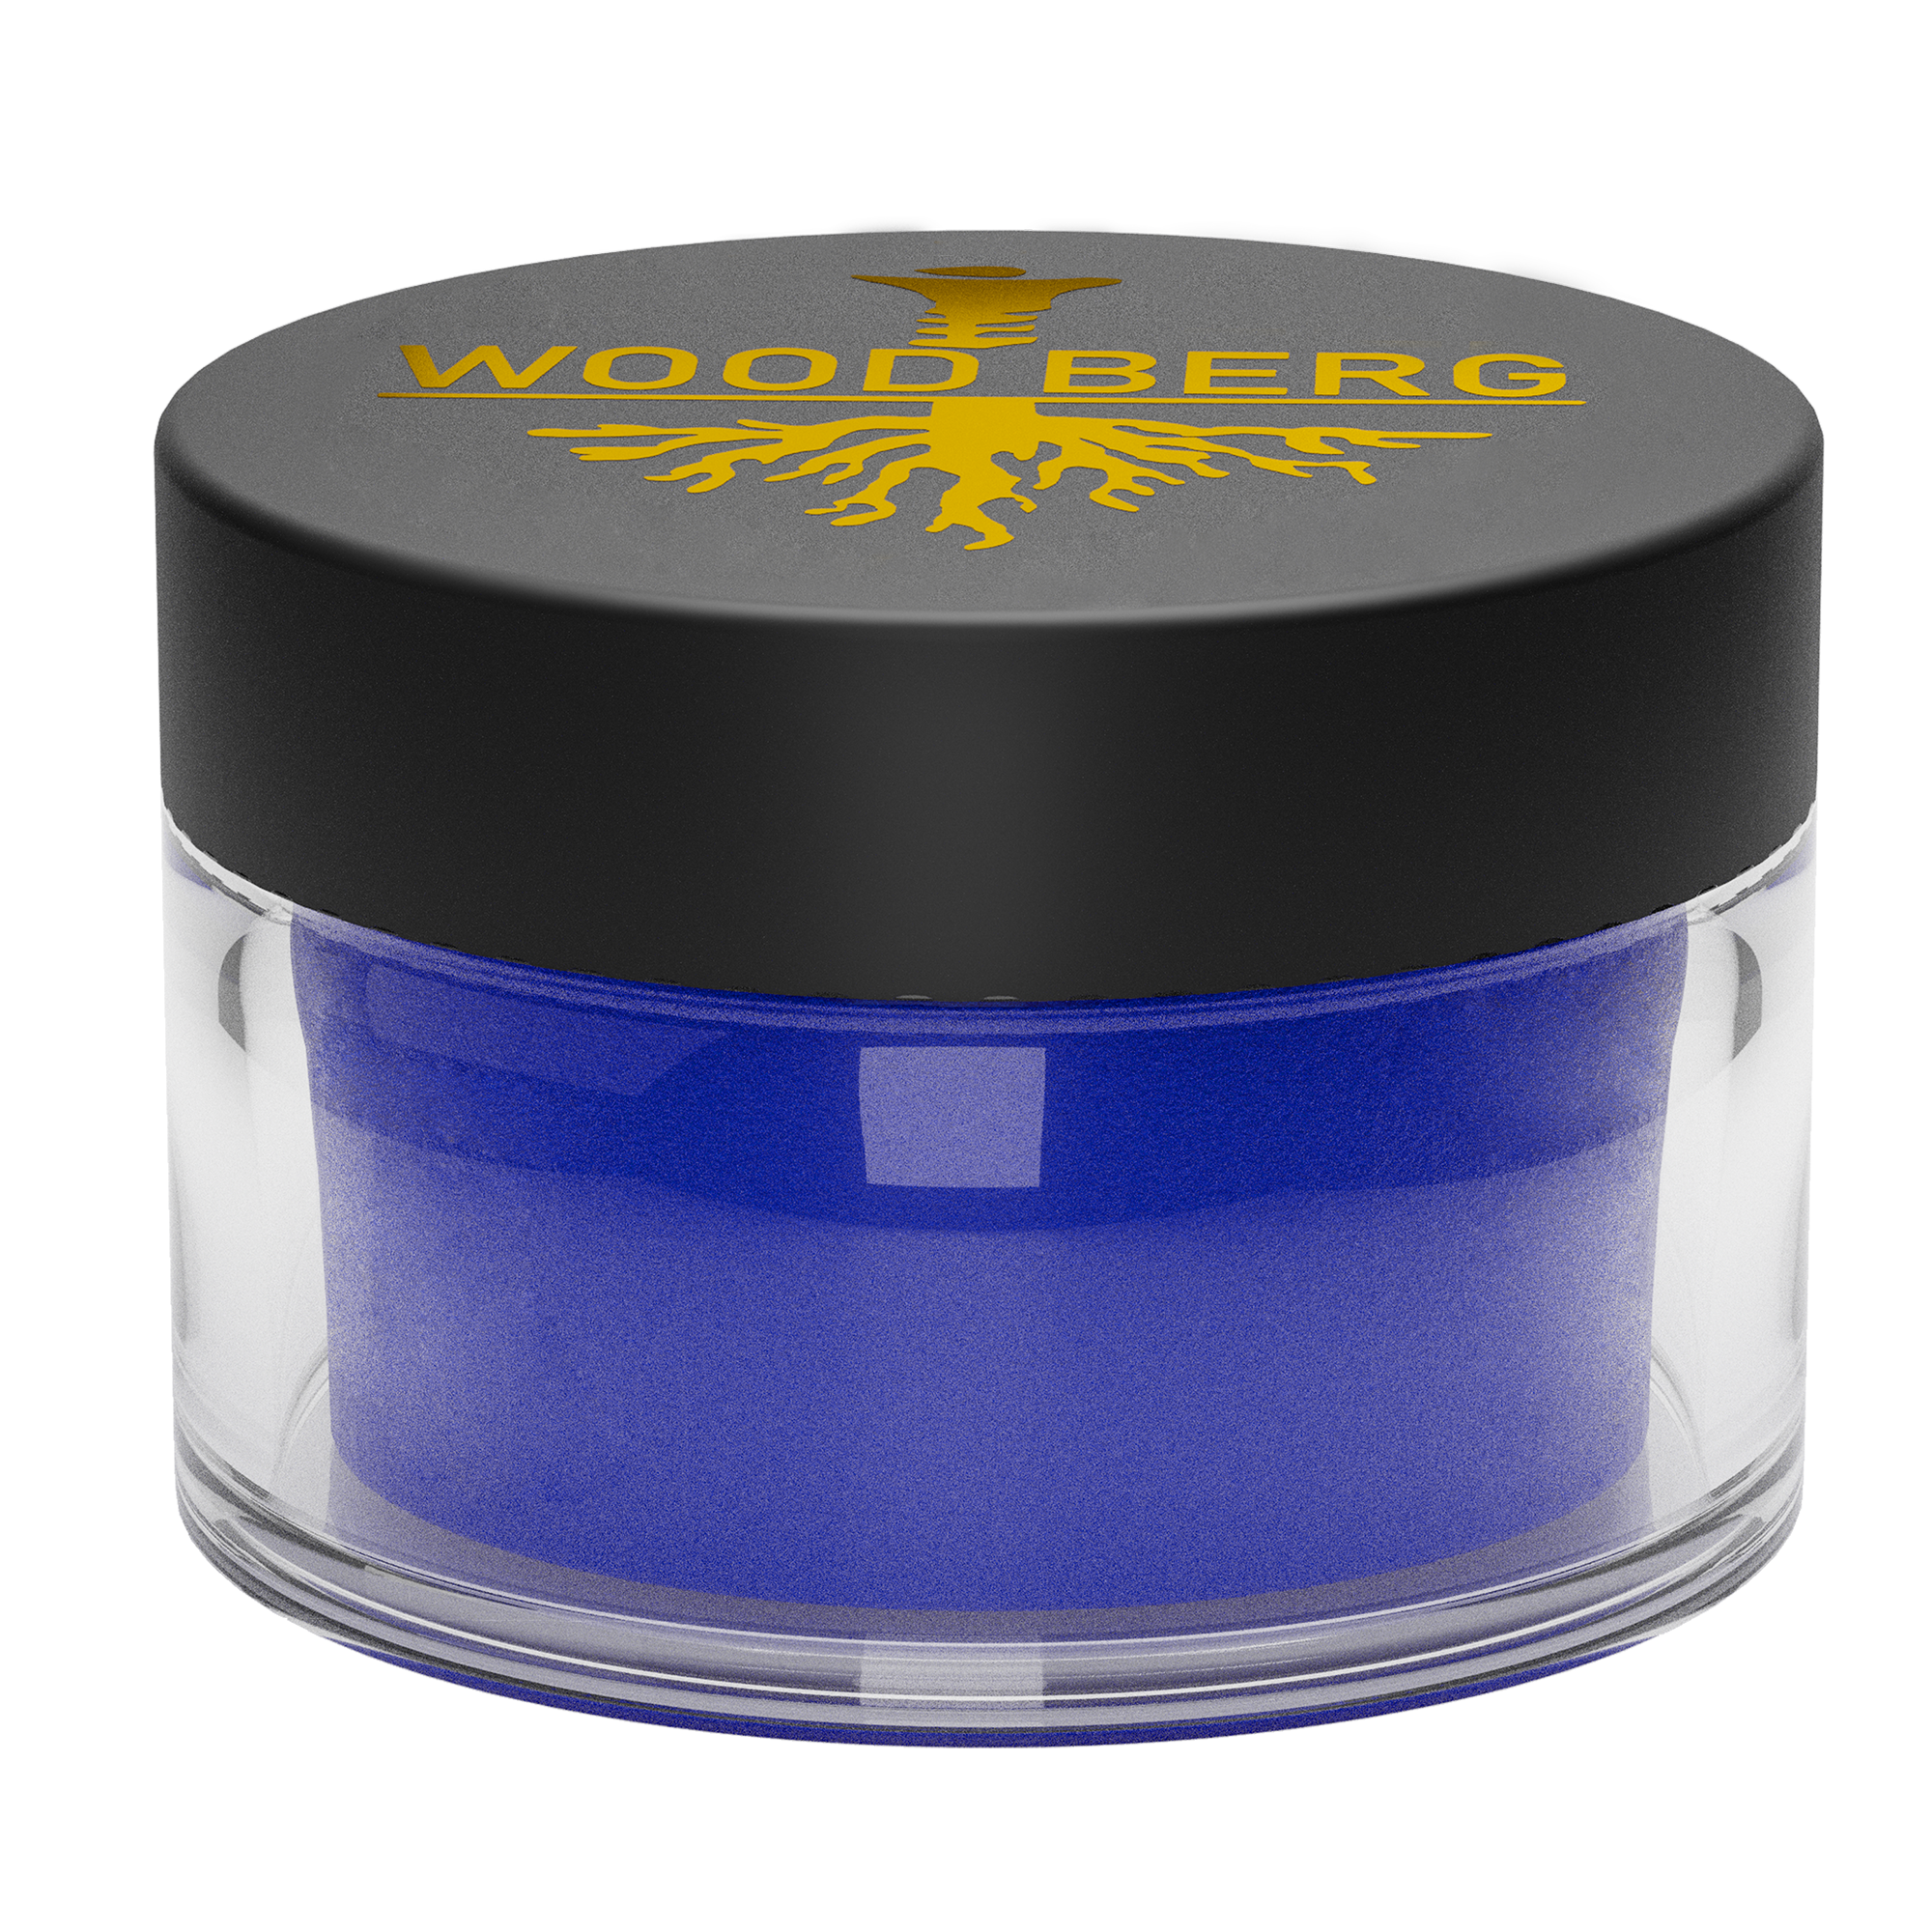 Woodberg - لون مايكا ازرق النيلي 15 غرام 